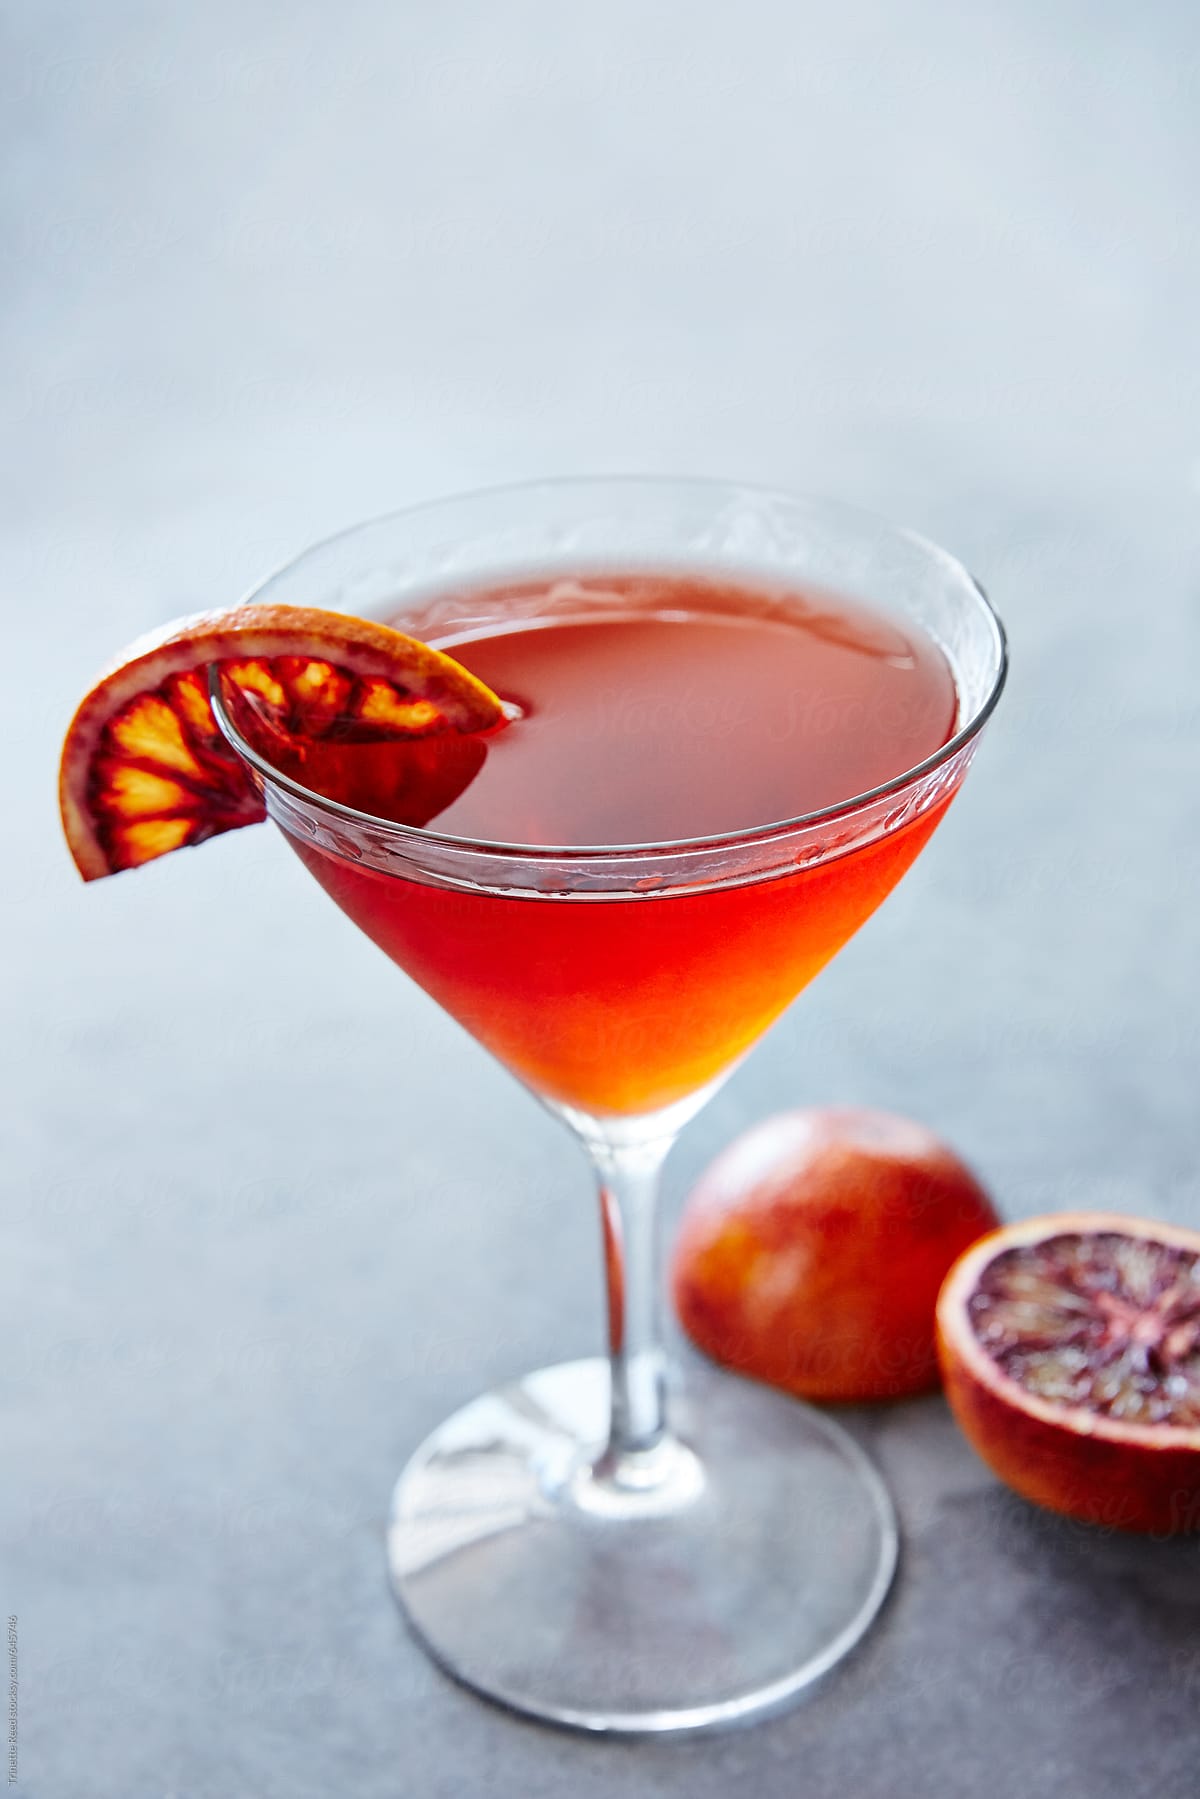 Blood orange vodka martini cocktail